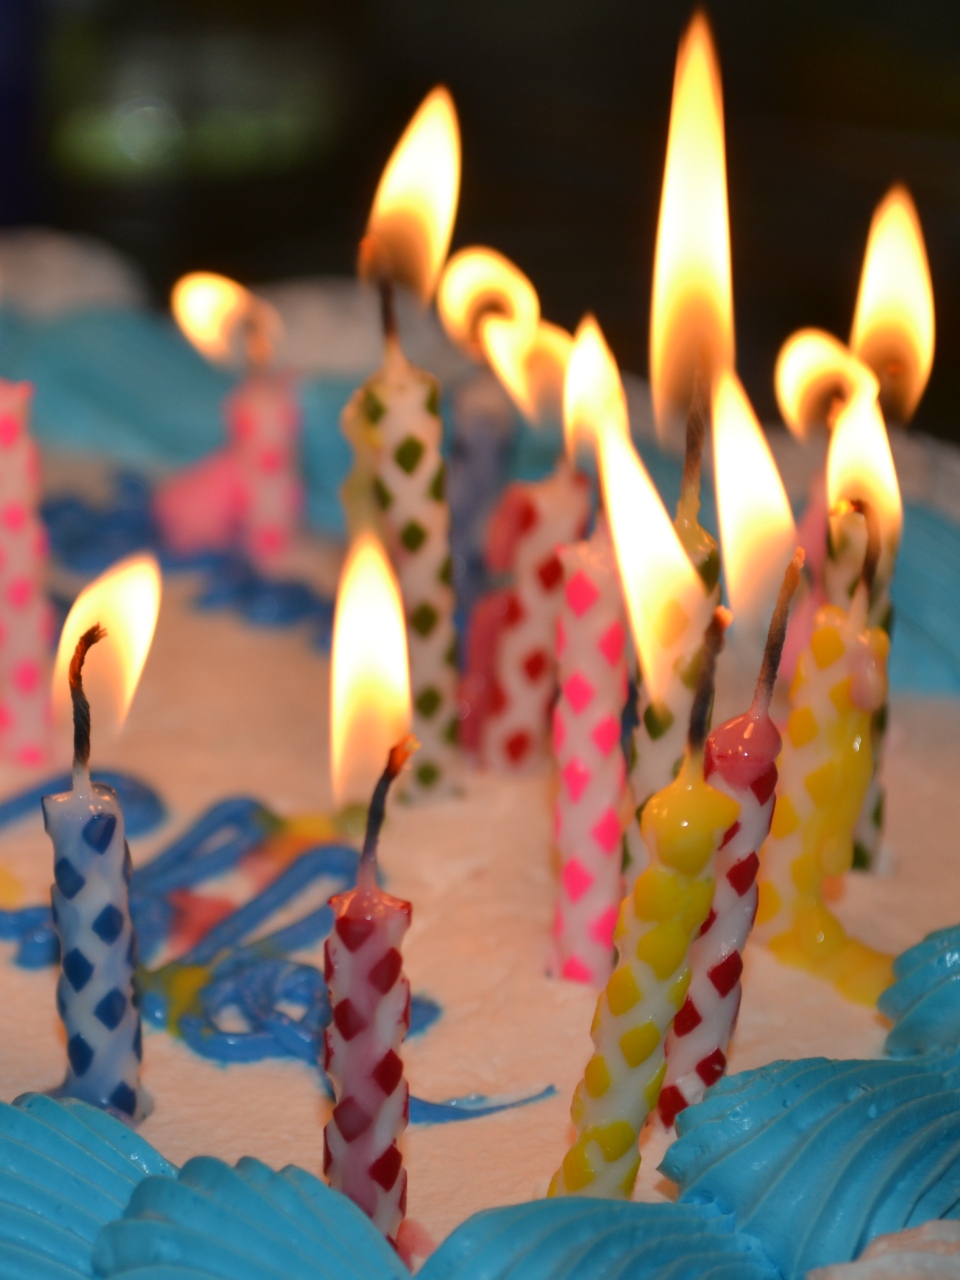 Free photo: Lit Candles on Birthday Cake - Birthday, Cake, Candles ...